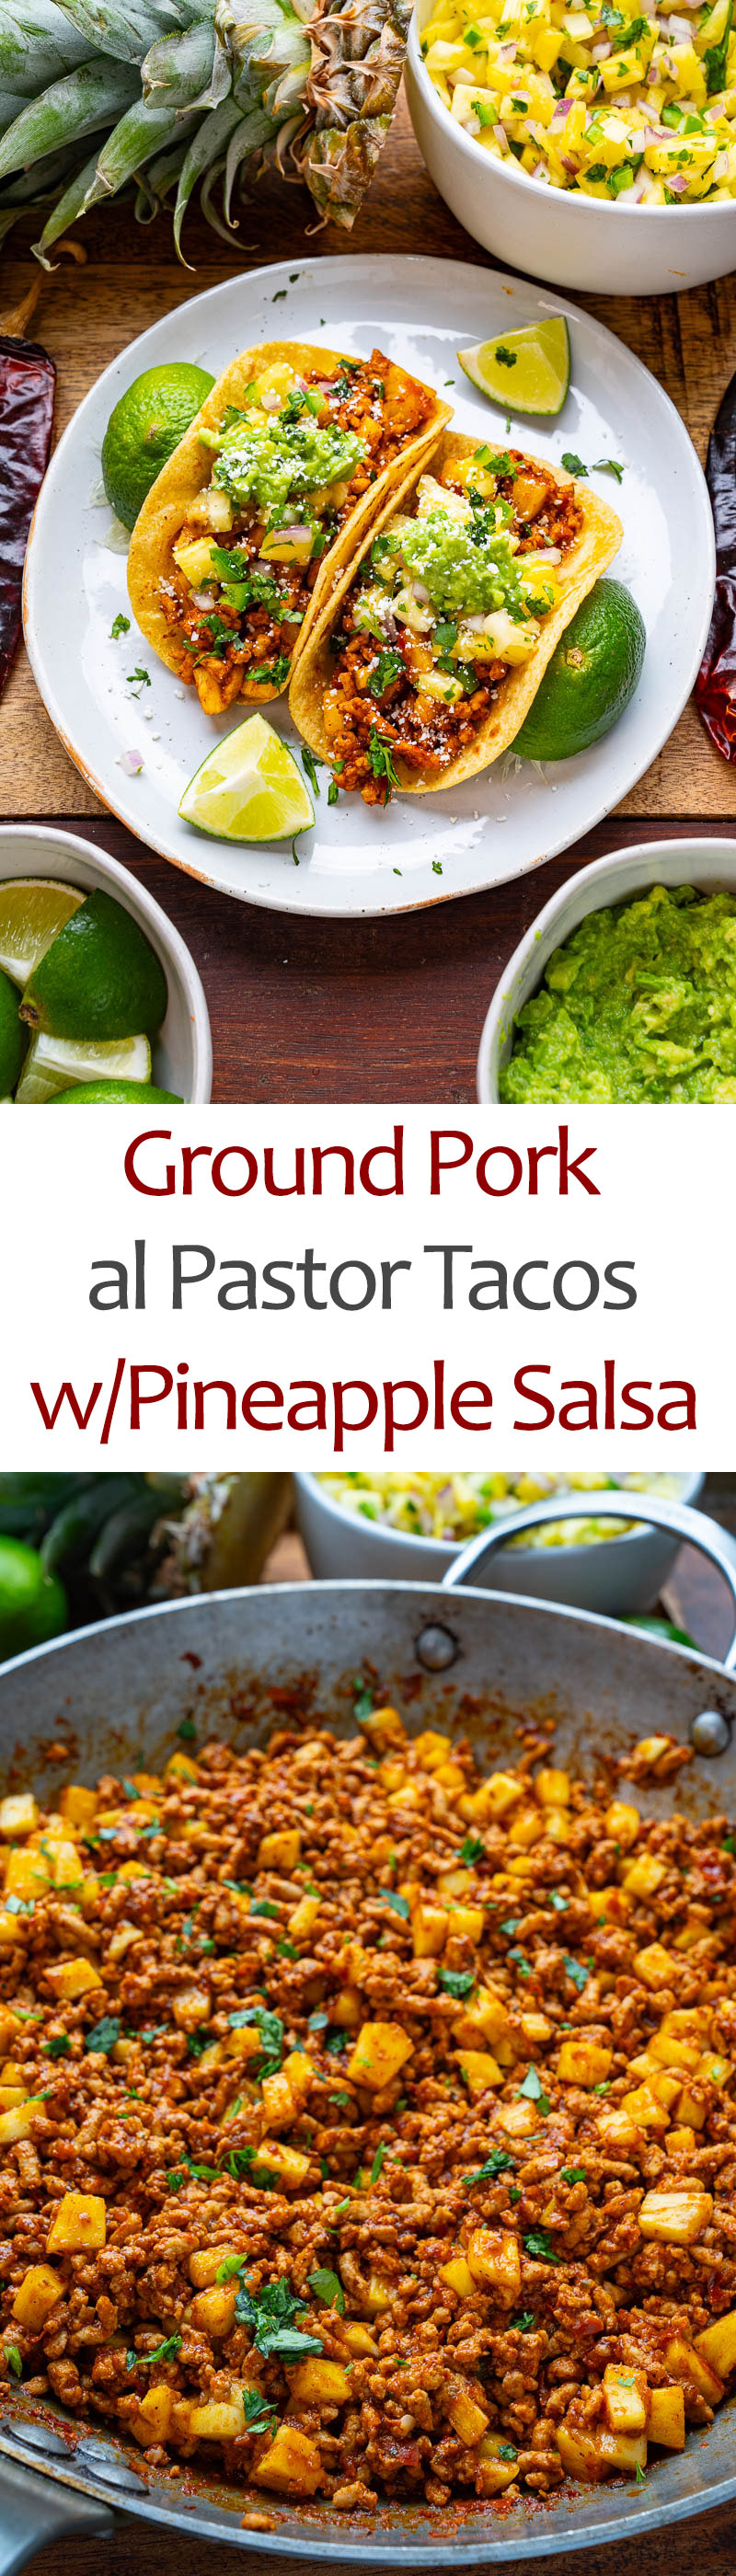 Ground Pork al Pastor Tacos with Pineapple Salsa